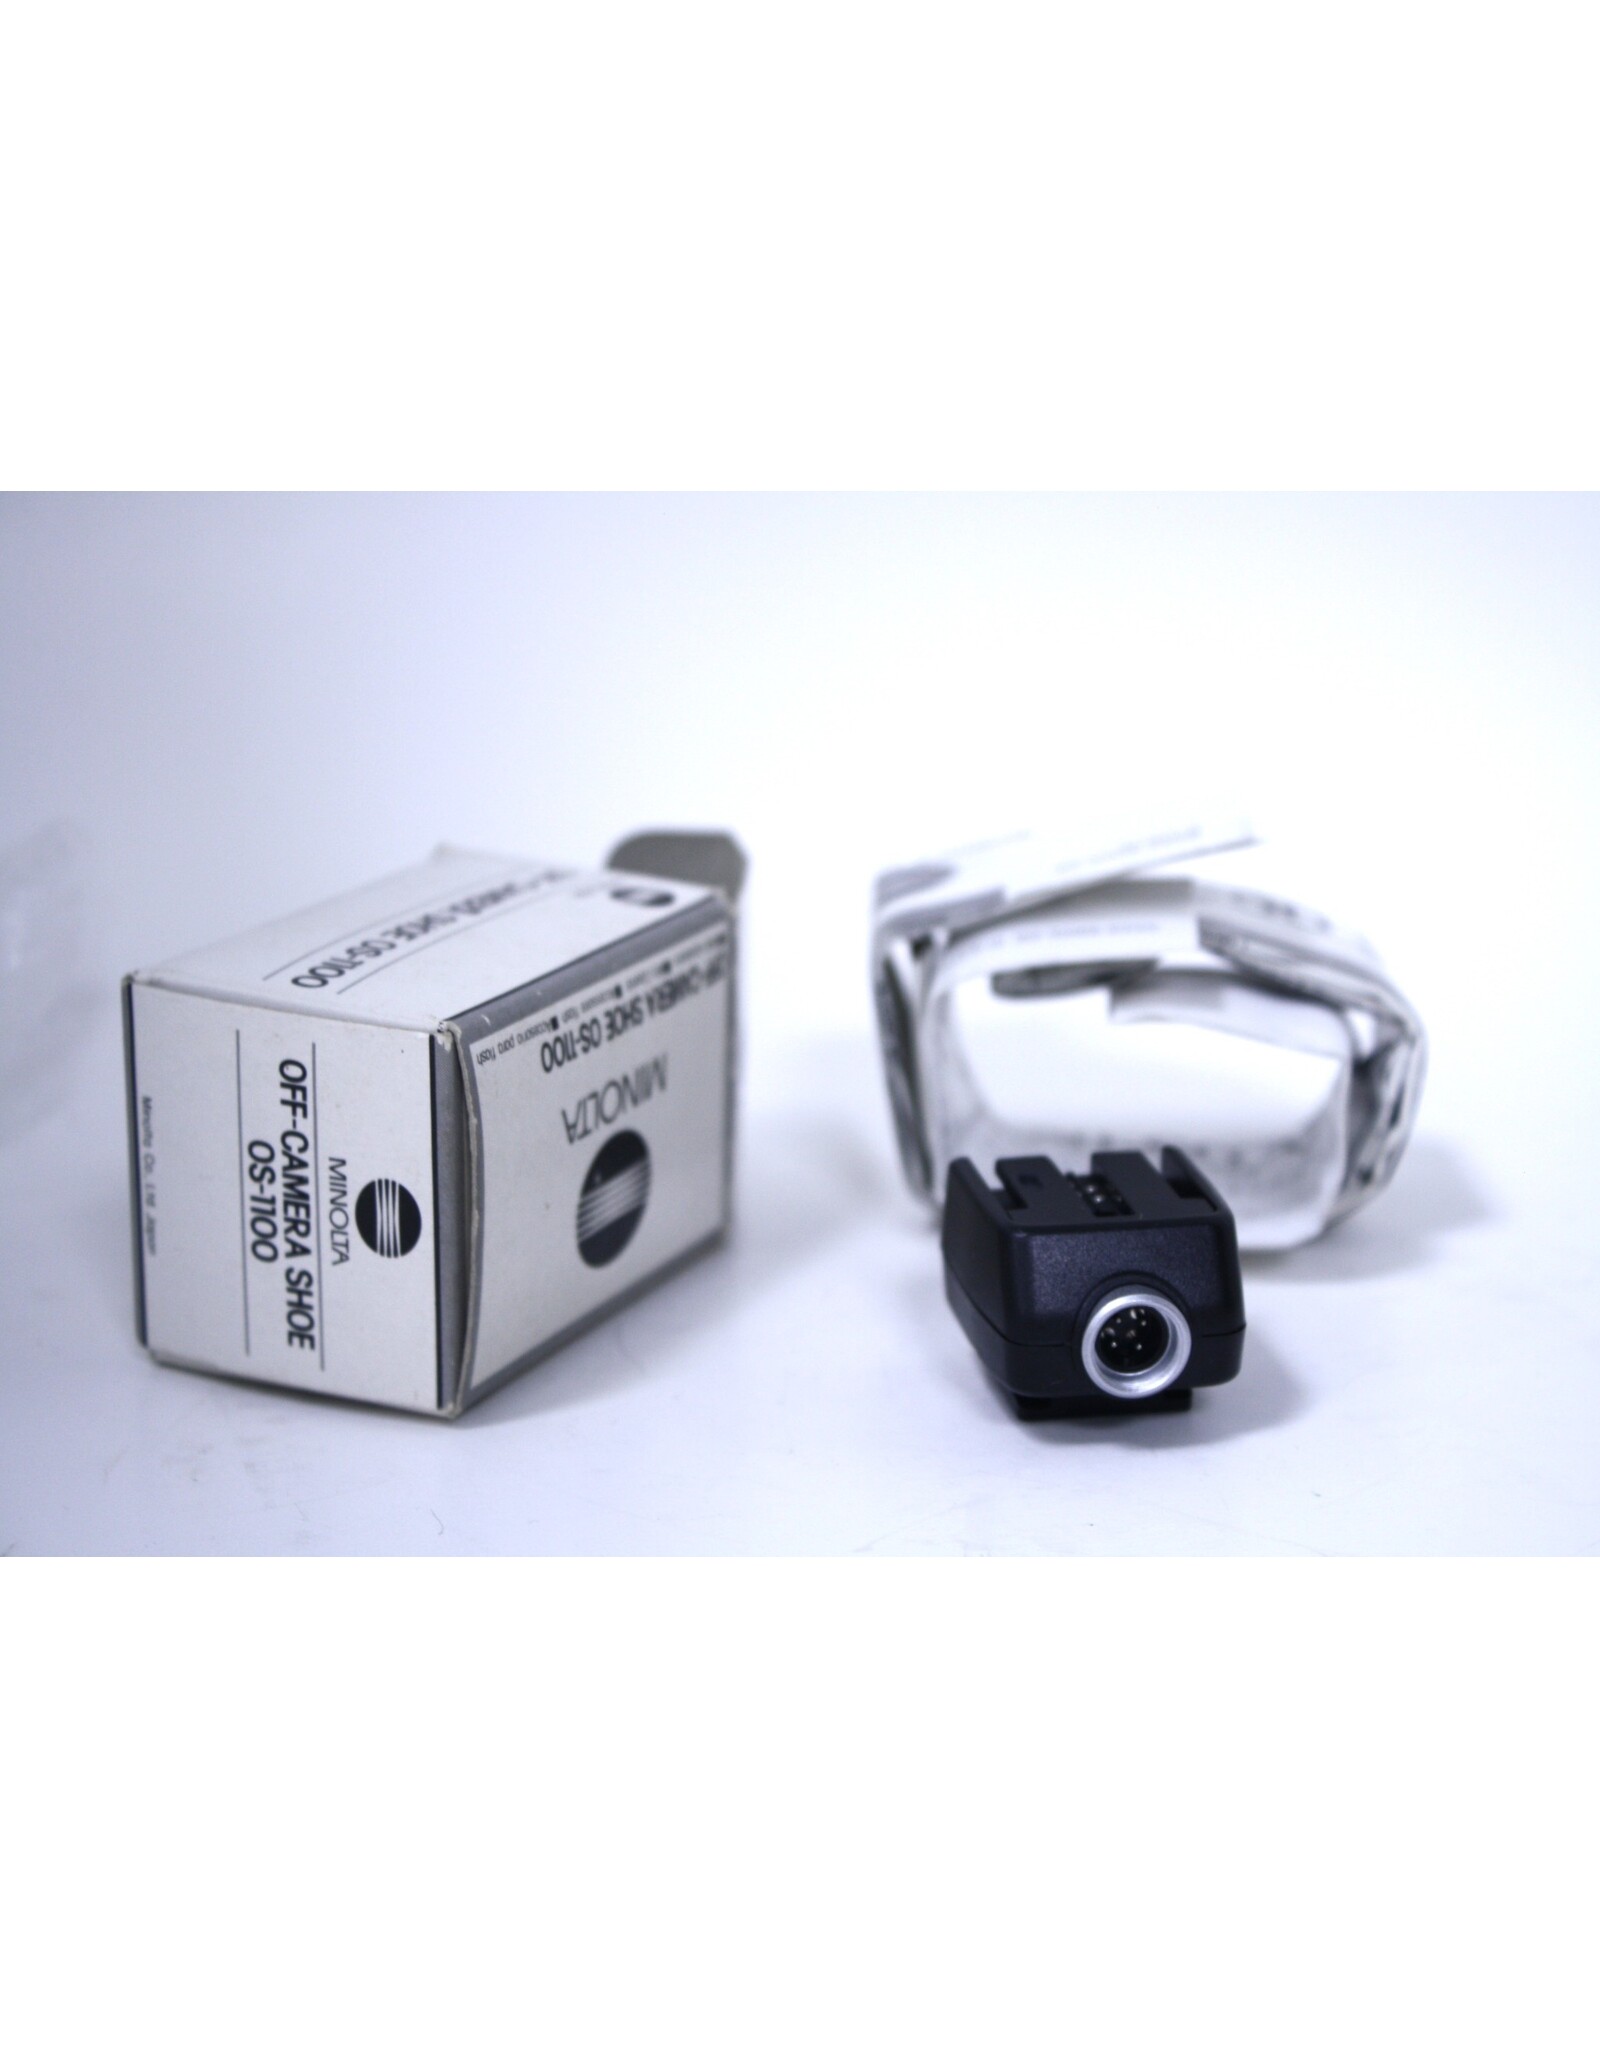 Konica Minolta OS-1100 Off Camera Shoe for i Series Flashes